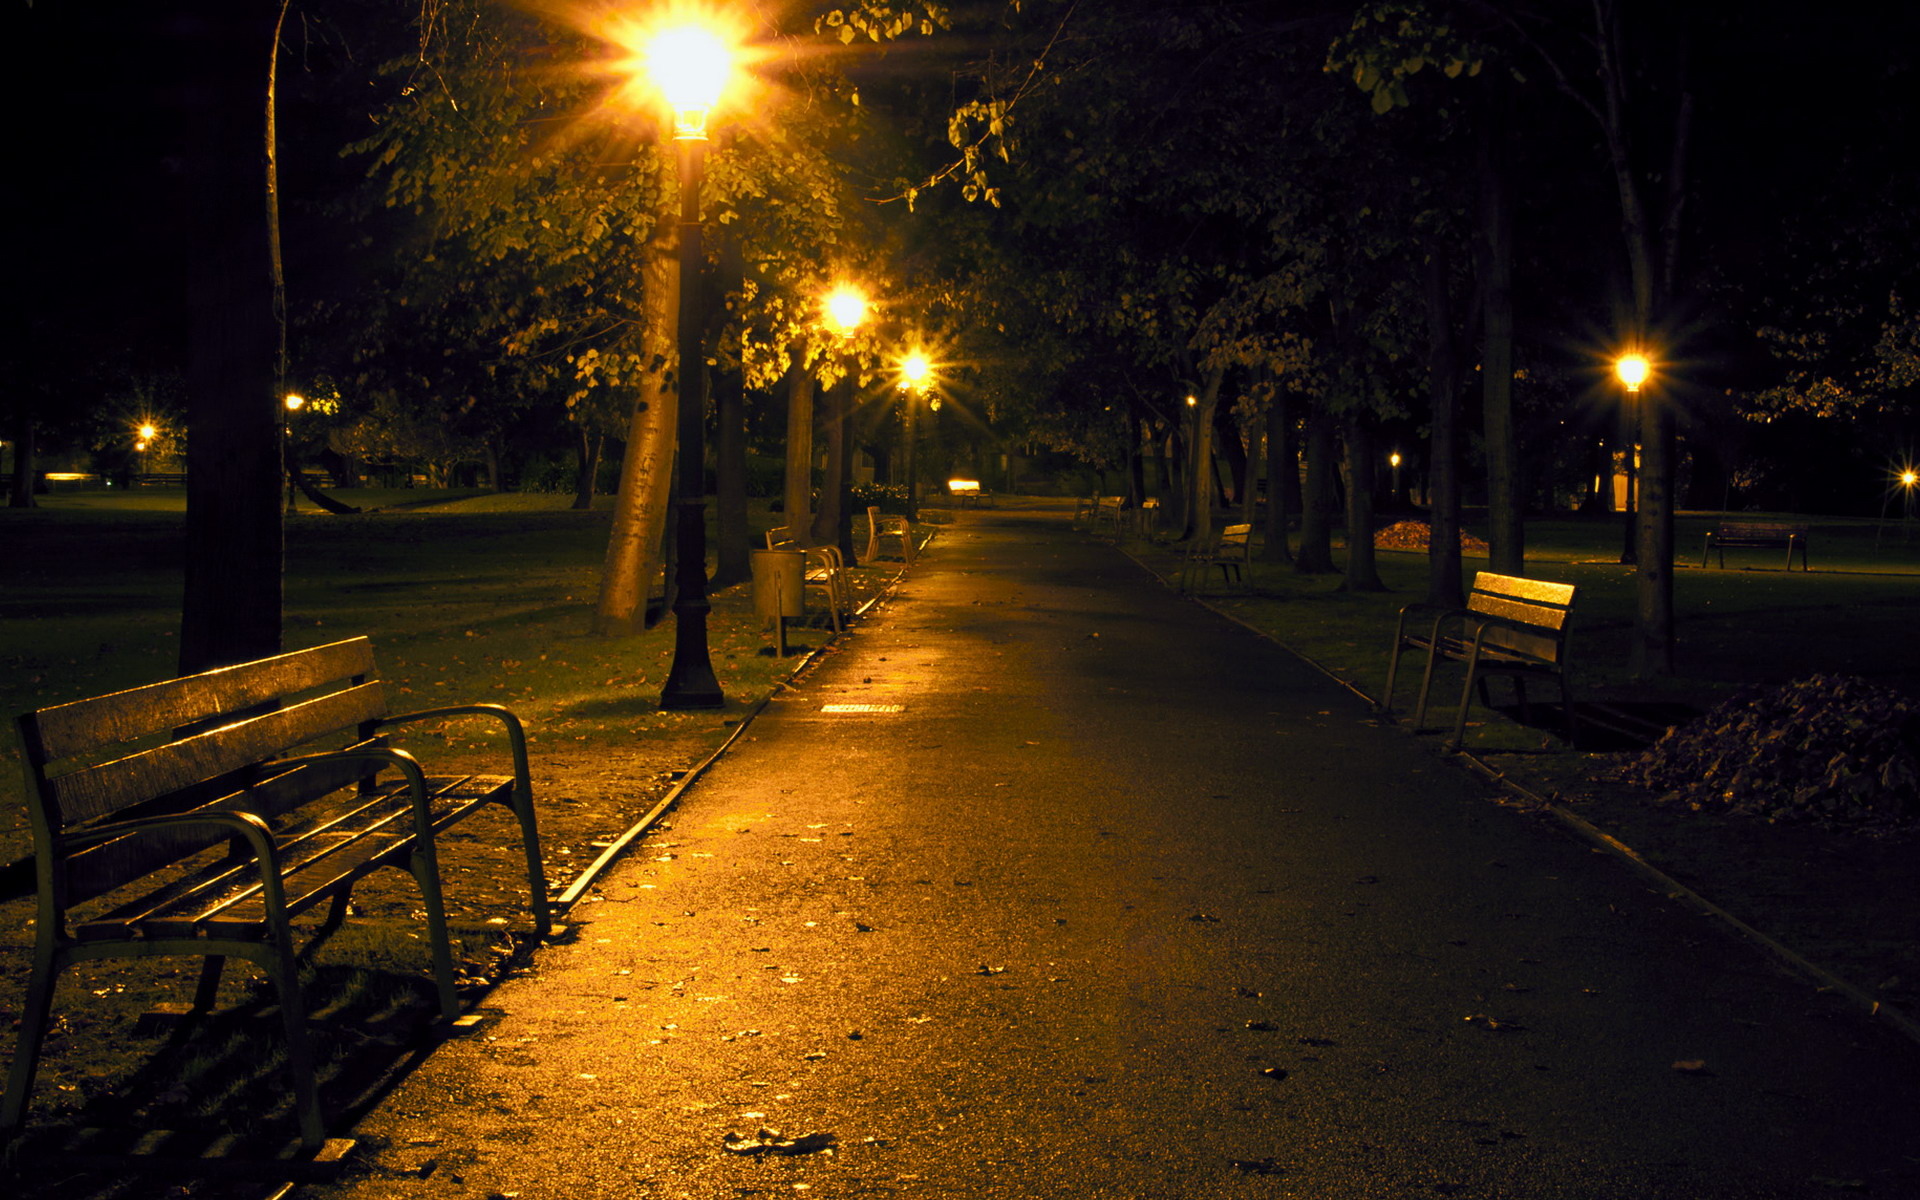 street lamp at night photo - 1